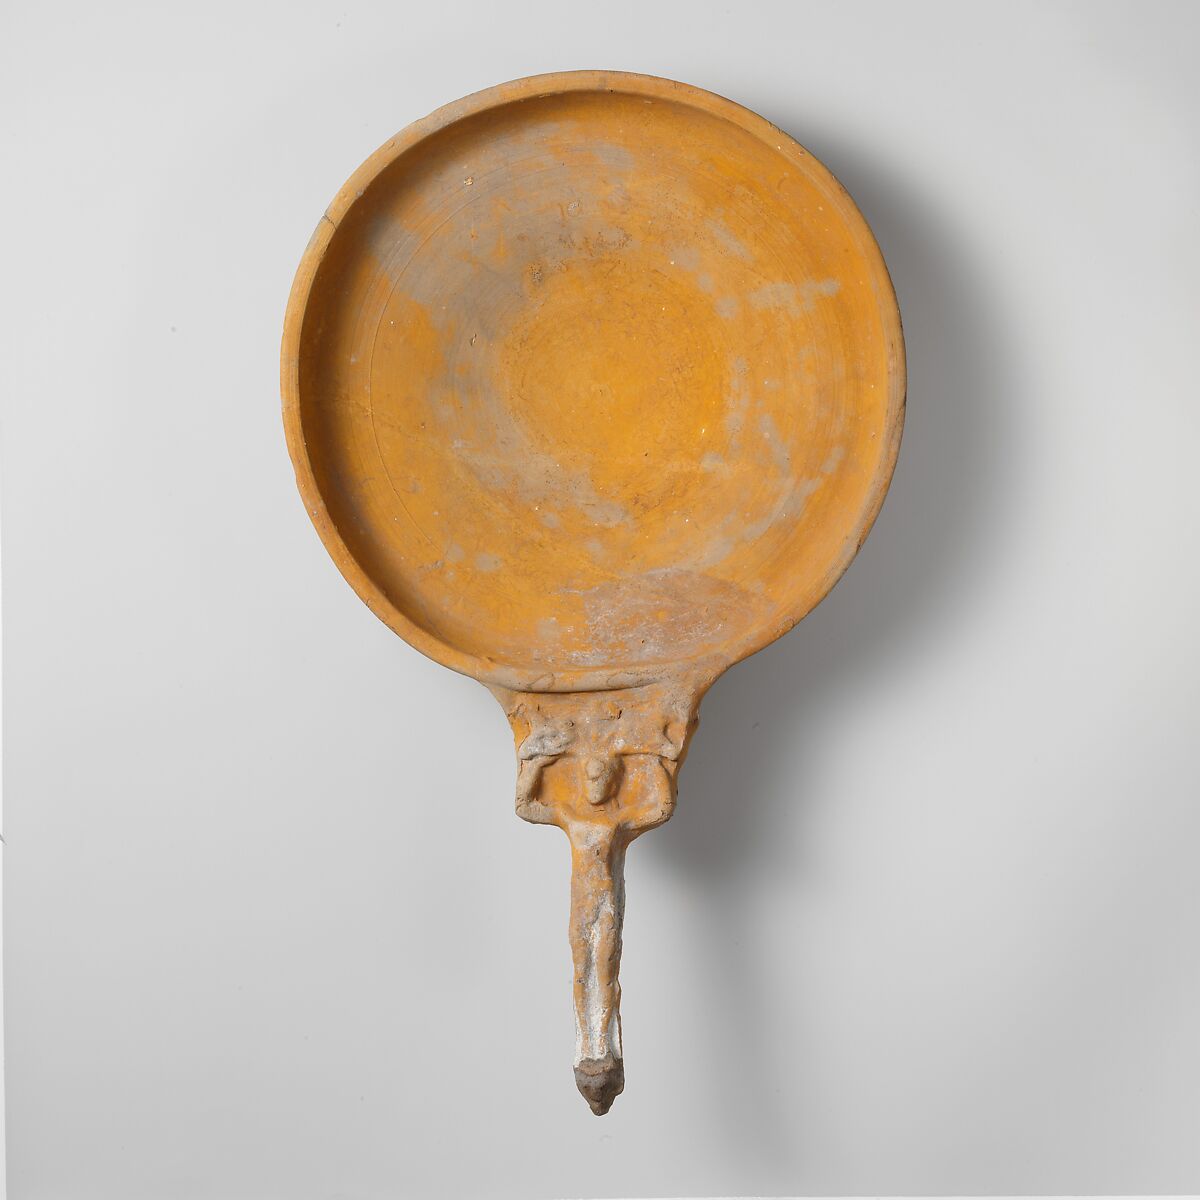 Terracotta patera (shallow bowl with handle), Terracotta, Greek, South Italian, Apulian 